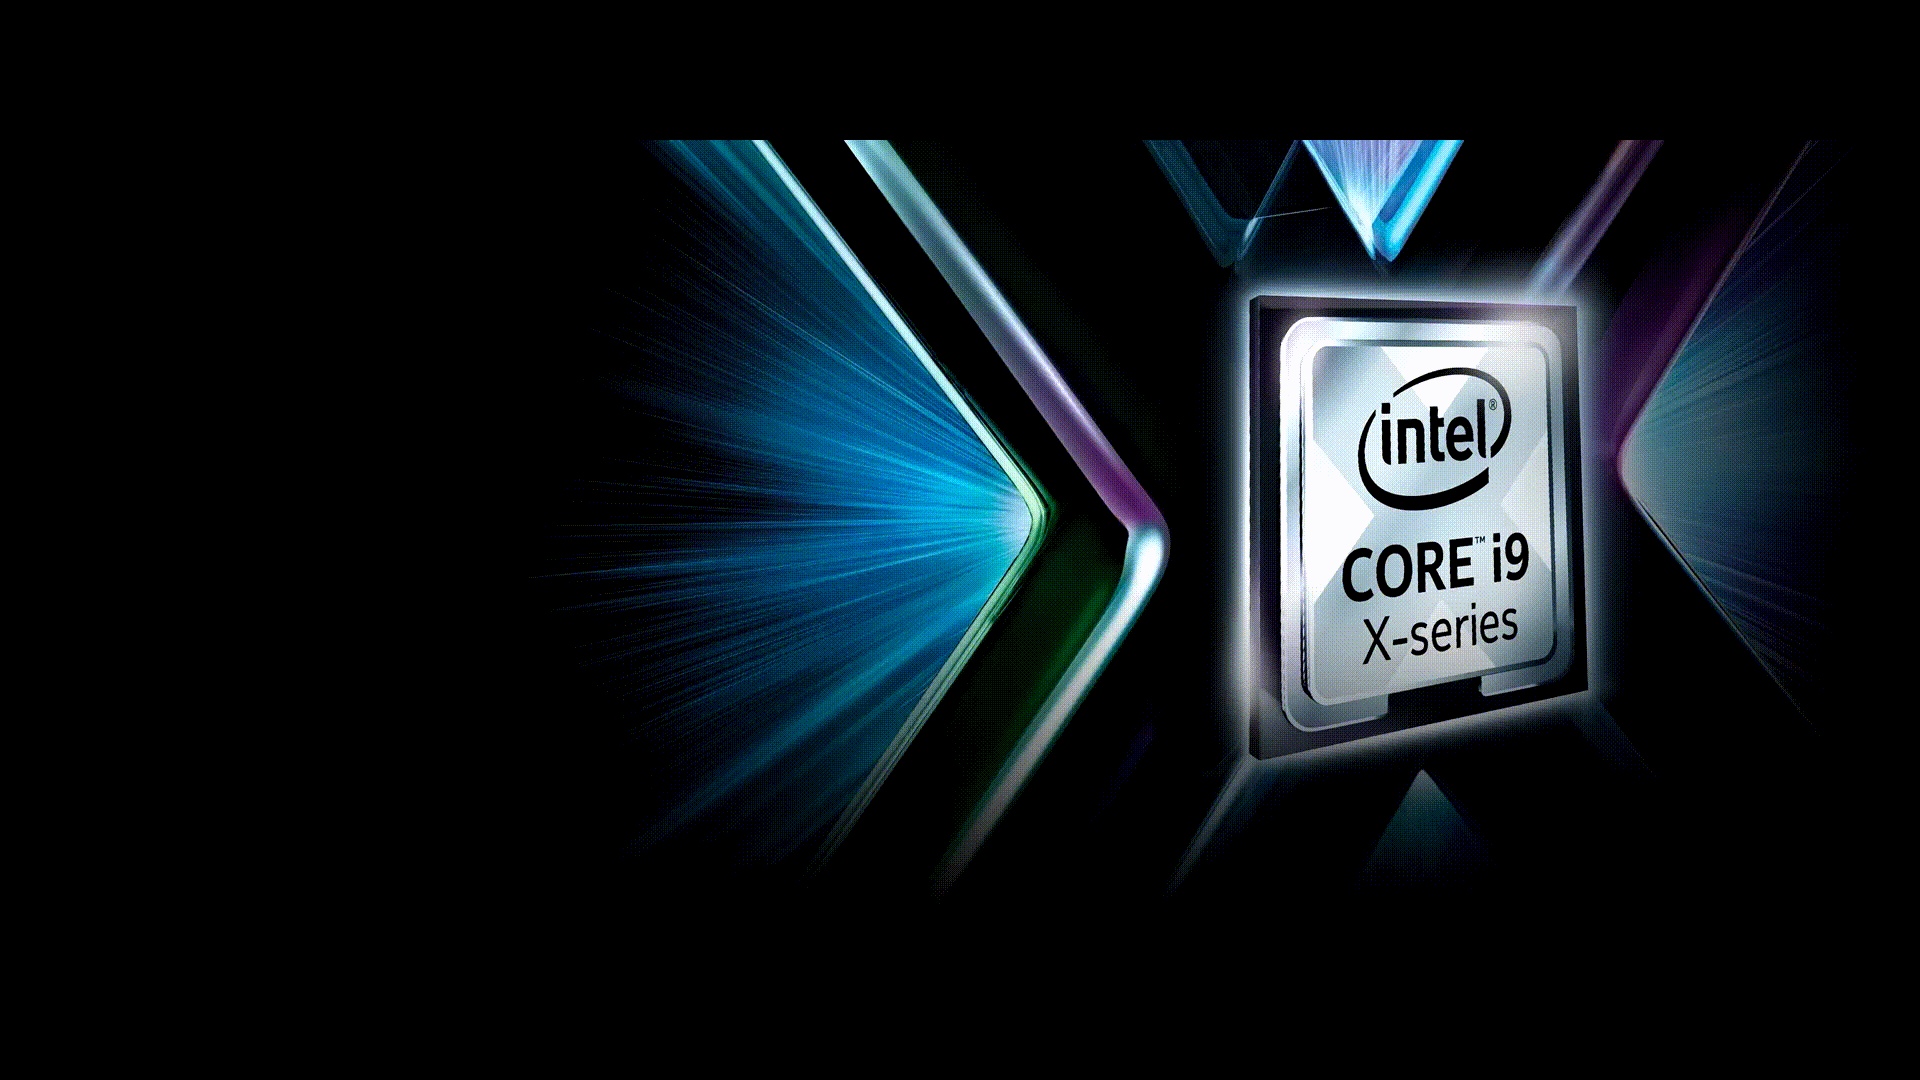 Intel 10 series. Intel Core i9-9900kf. Intel Core i9 9900kf x Series. Intel Core i7-9700kf. Intel Core i9-11900kf.